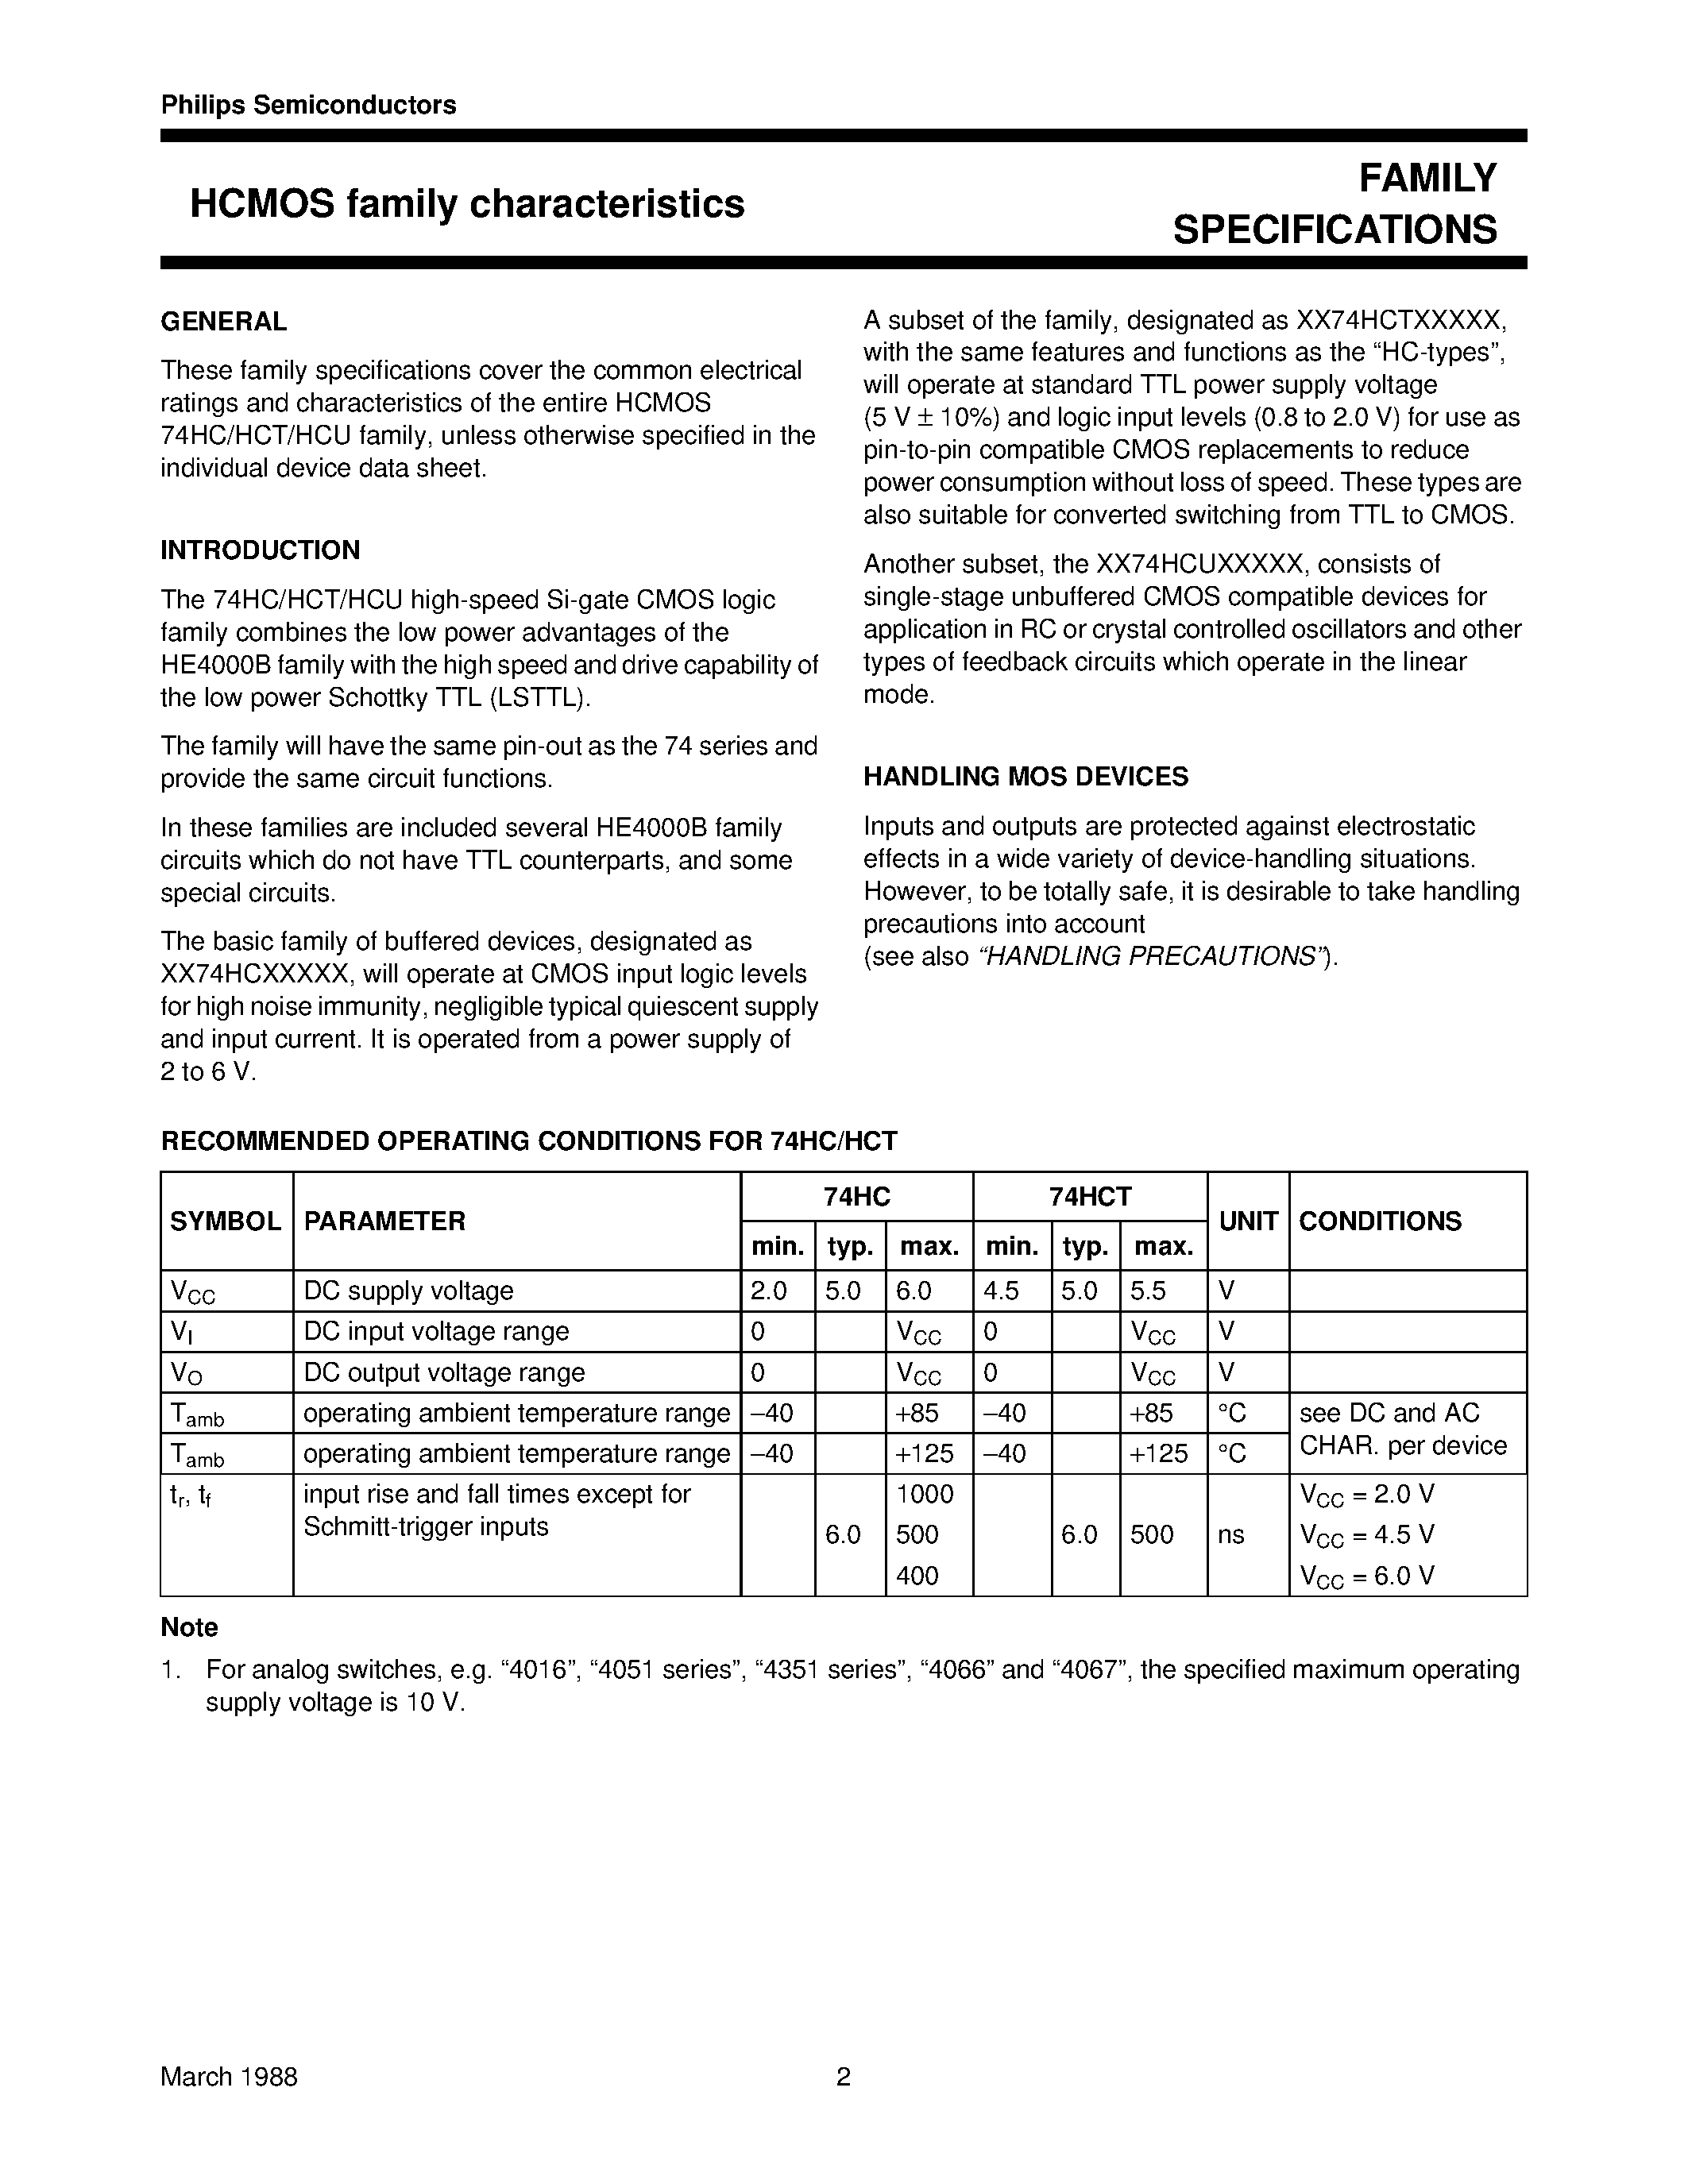 Datasheet 74HCT - HCMOS family characteristics page 2